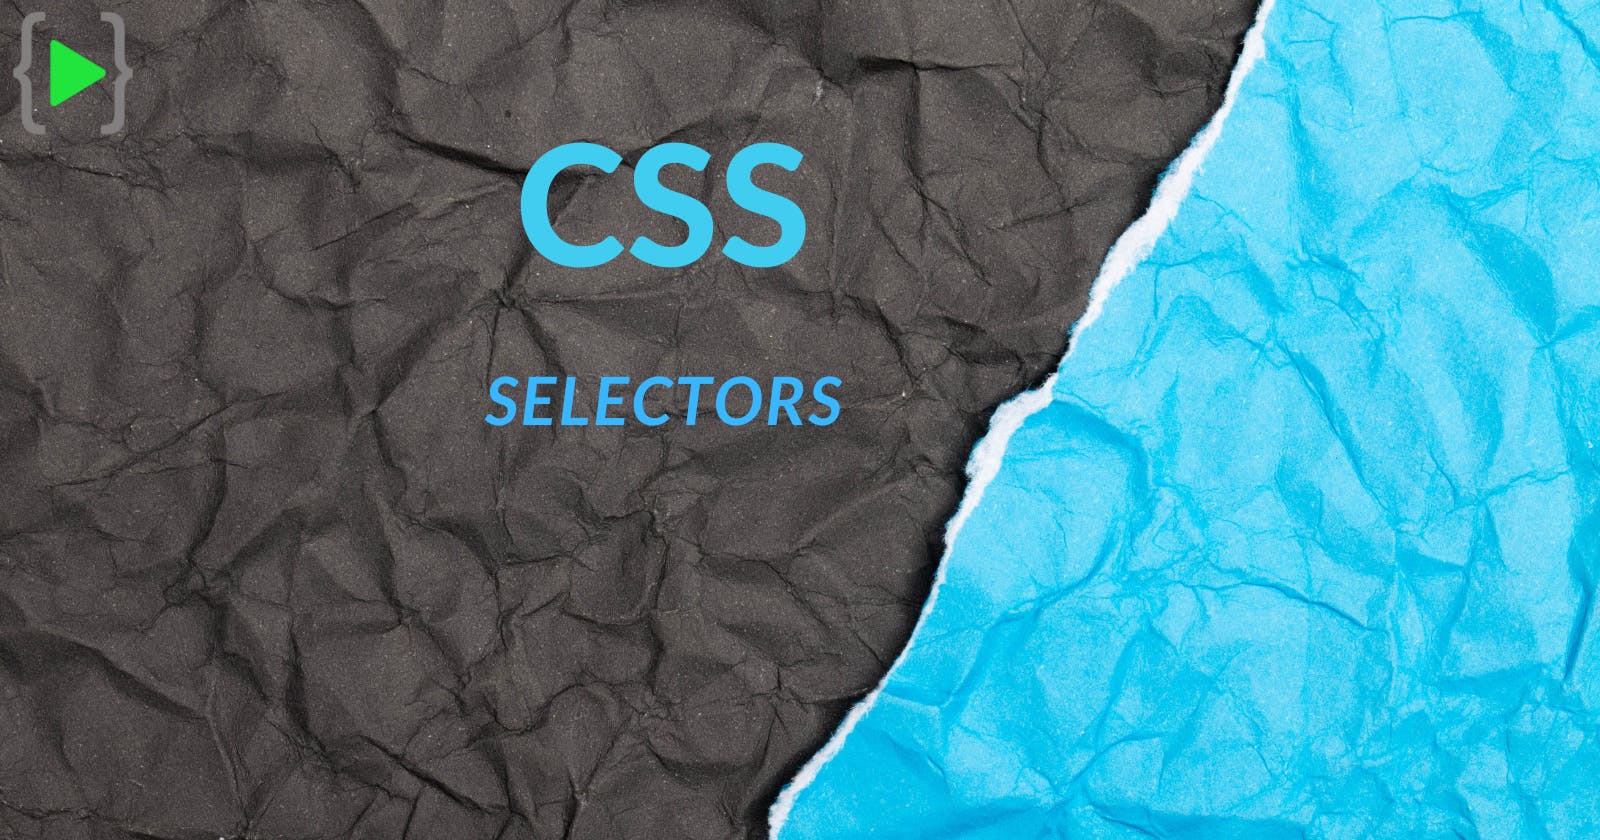 Let's Discuss About CSS Selectors...